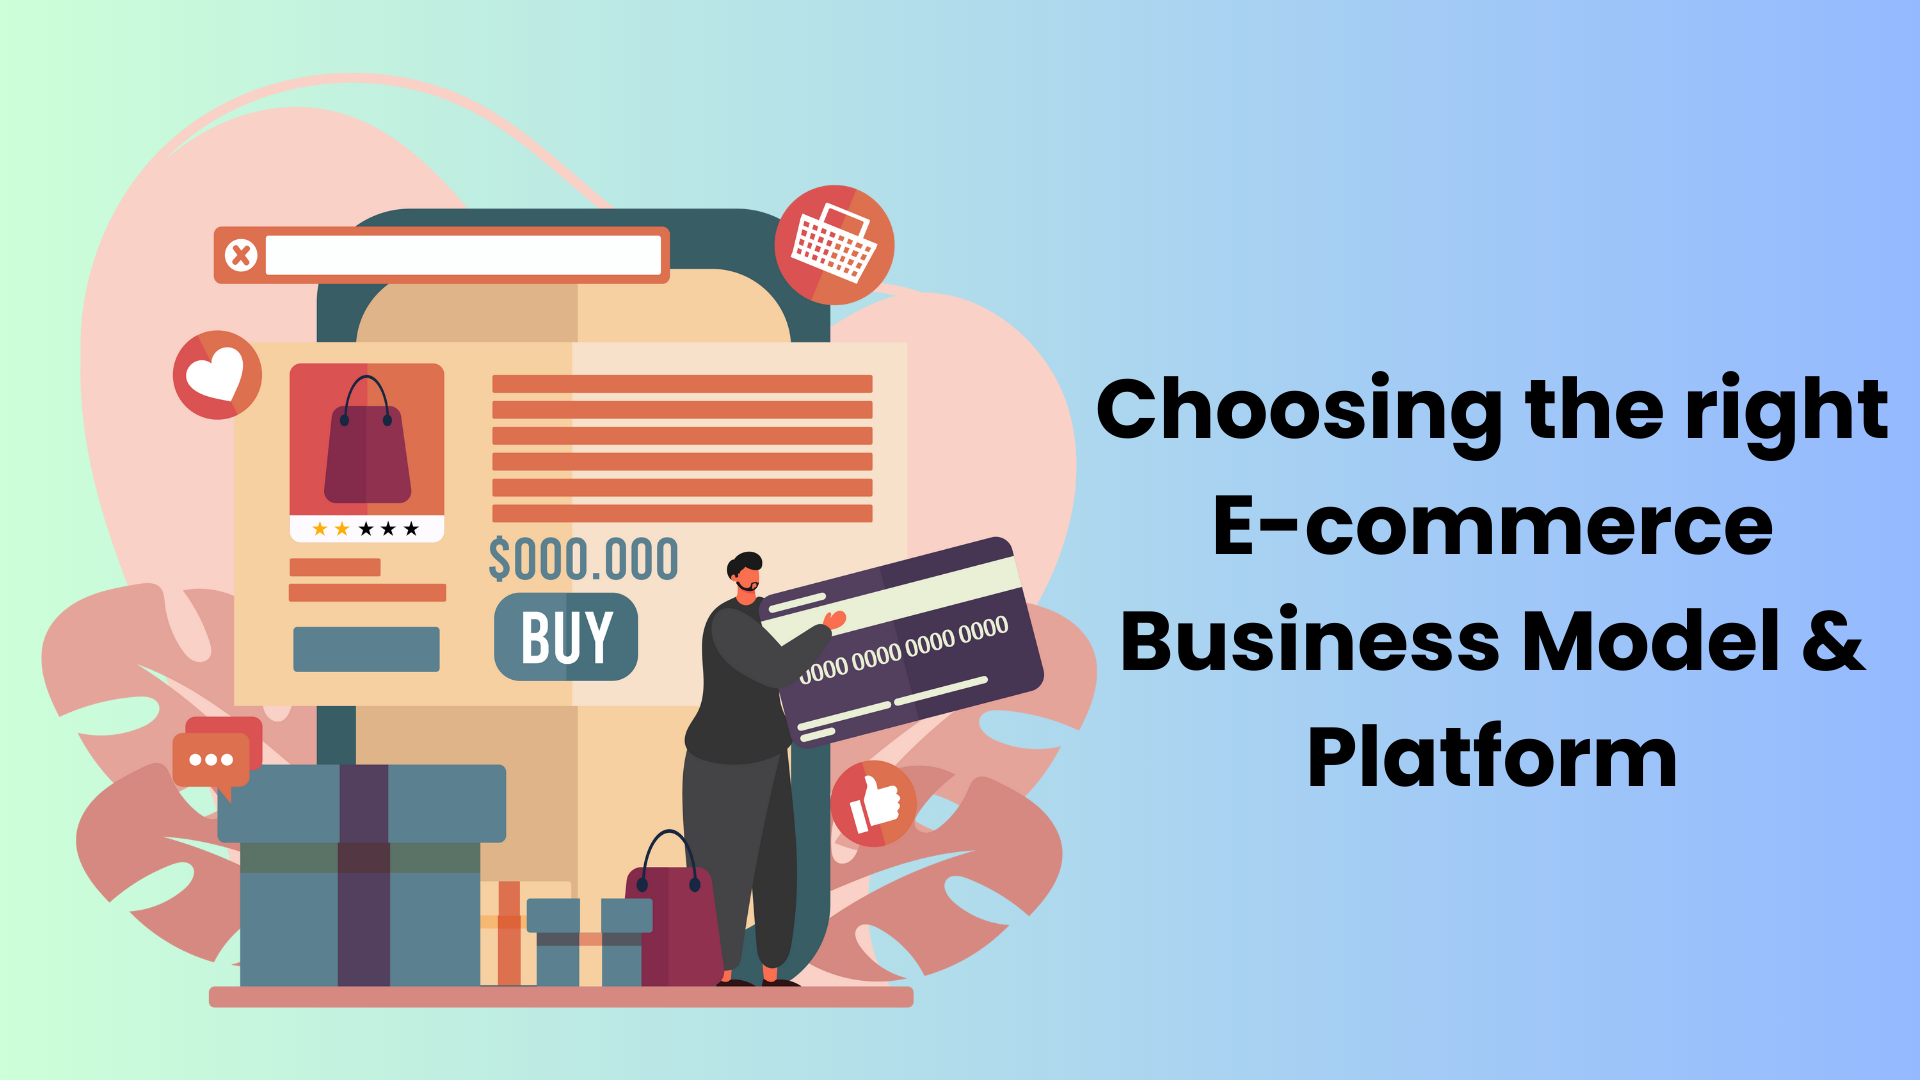 E-commerce Business Model & Platform